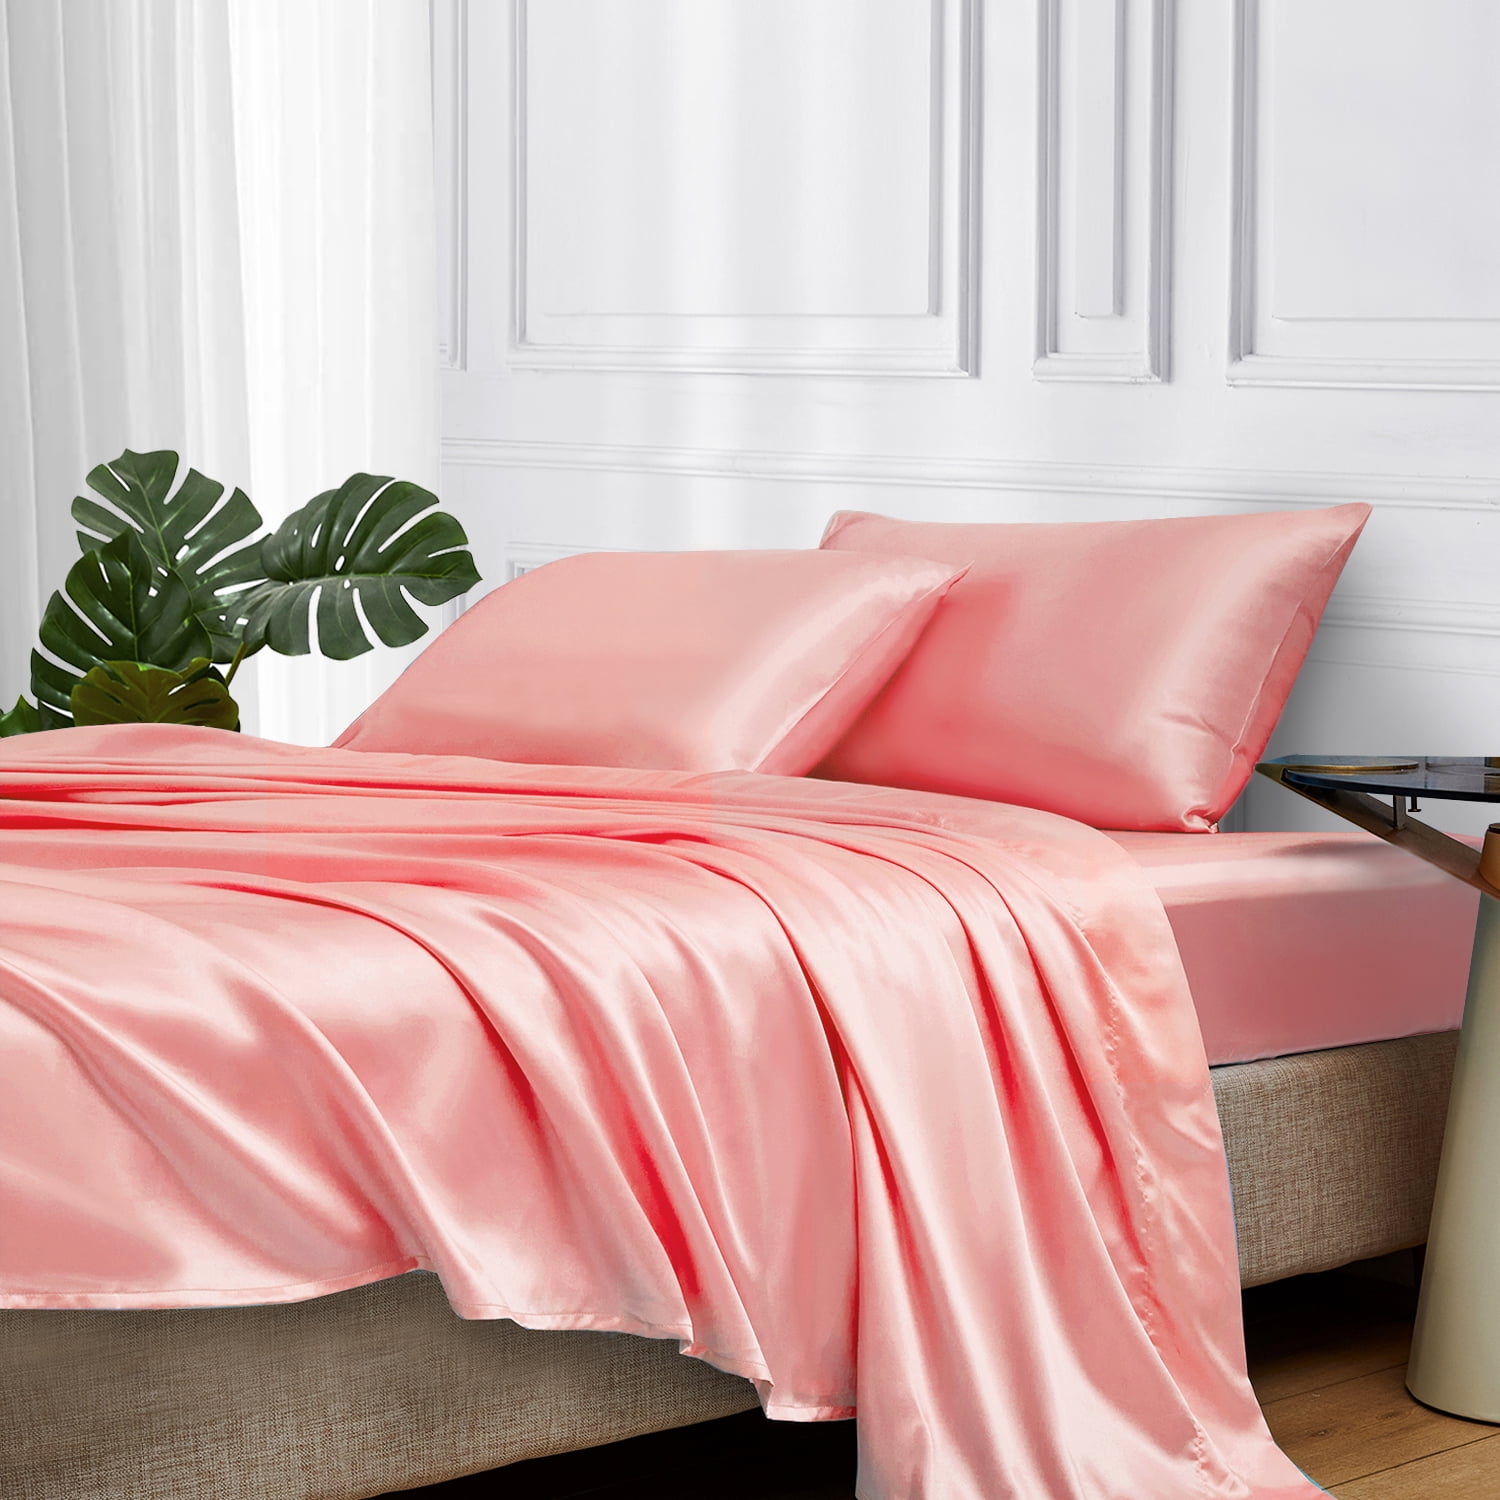 Details about   Satin Silk Sheet Bedding Set Luxury Bed Linen Set Sheets Mattress Bedspread Bed 